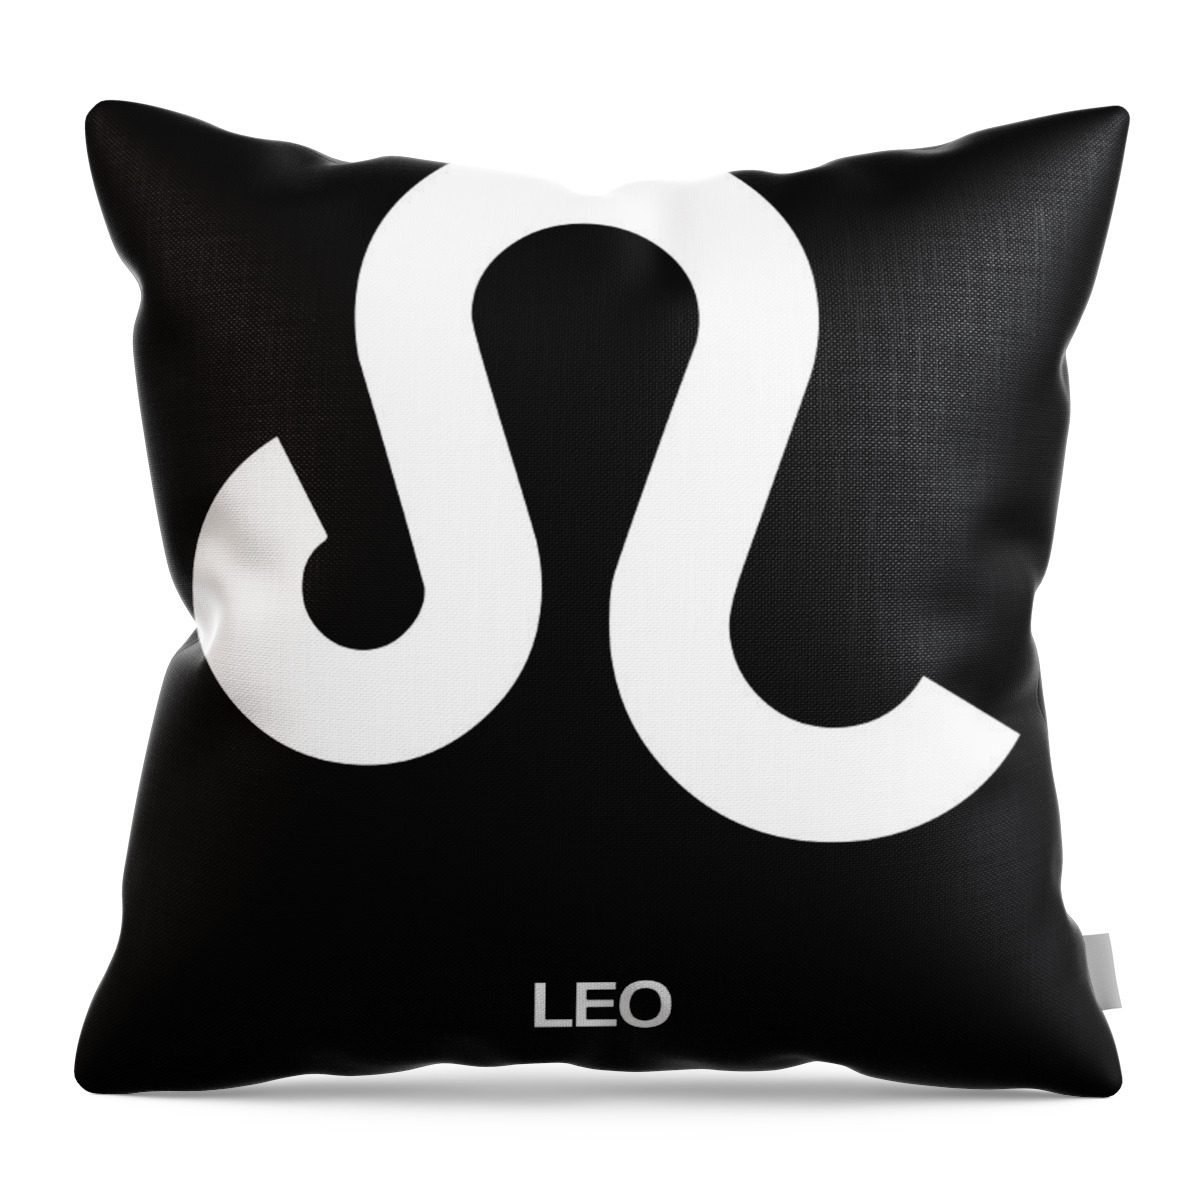 Leo Throw Pillow featuring the digital art Leo Zodiac Sign White by Naxart Studio